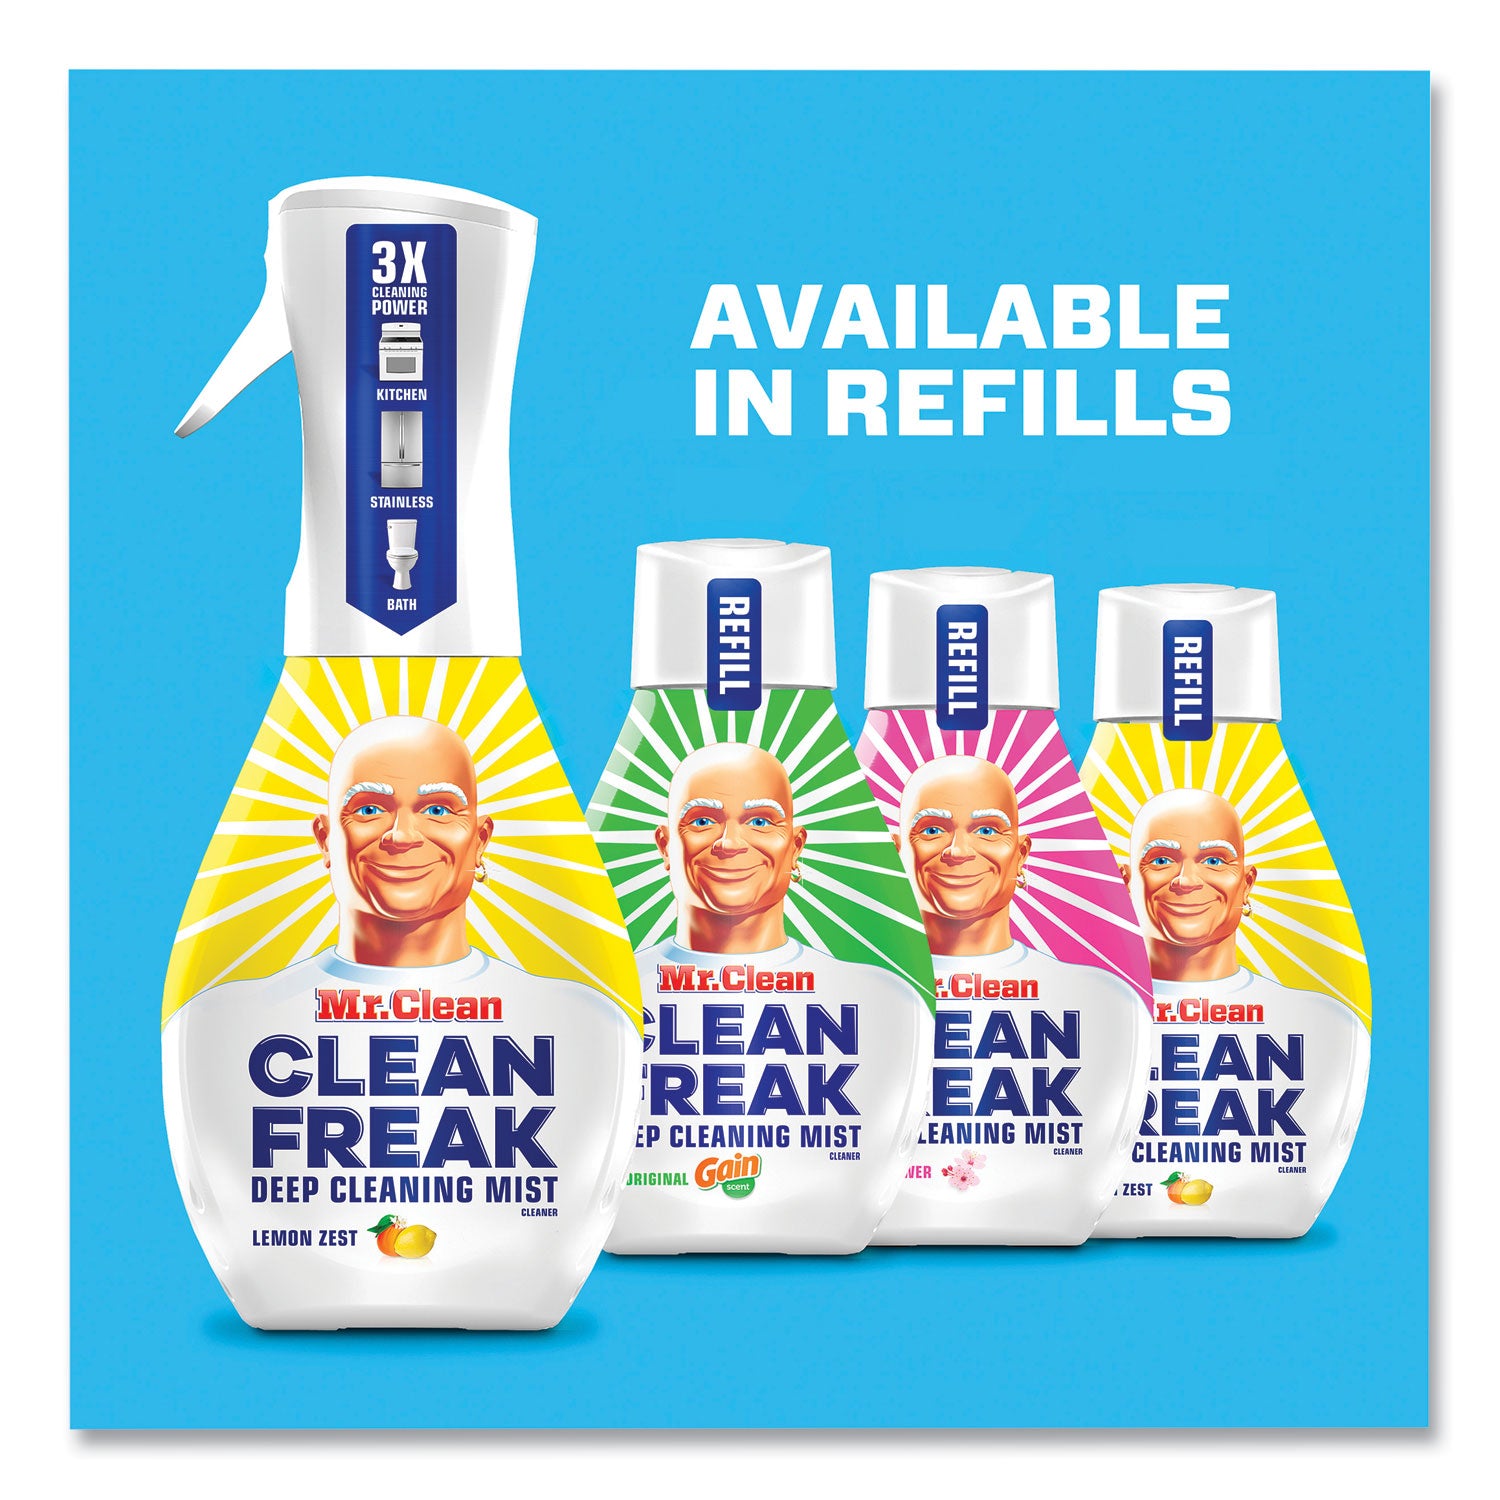 clean-freak-deep-cleaning-mist-multi-surface-spray-refill-lemon-zest-16-oz-refill-bottle_pgc79130 - 3